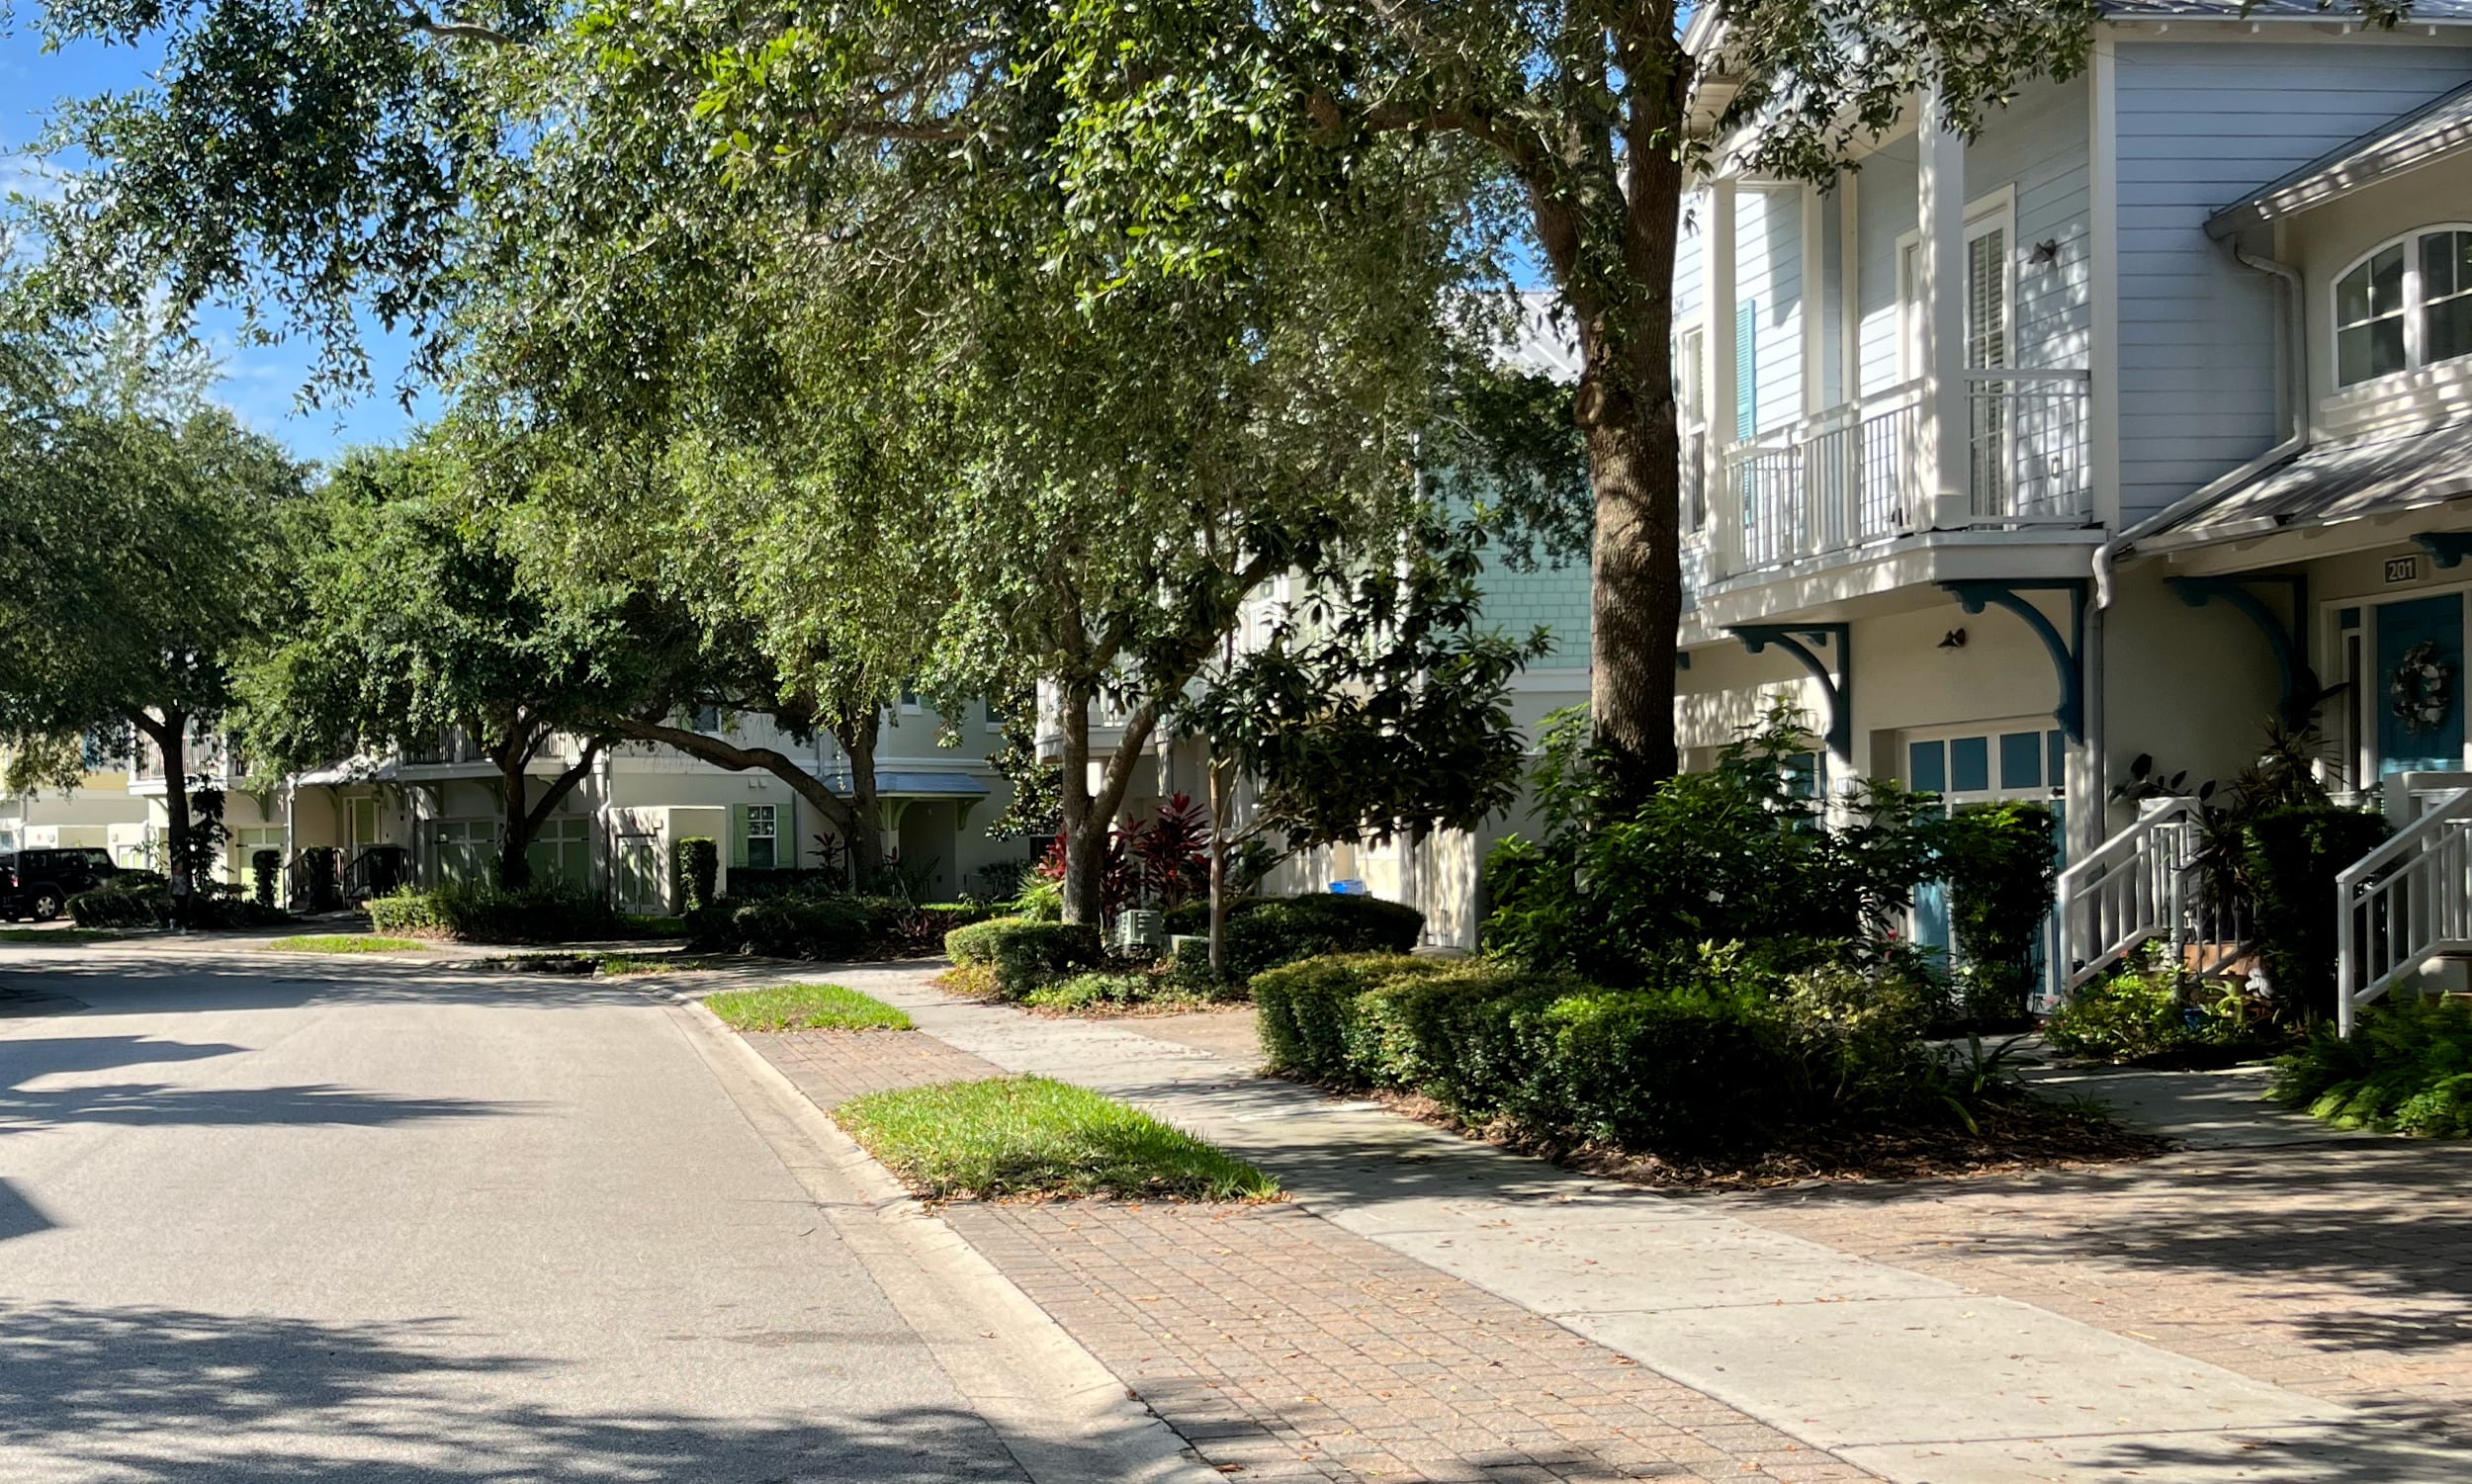 St. Augustine Beach neighborhood street view called Sea Grove.